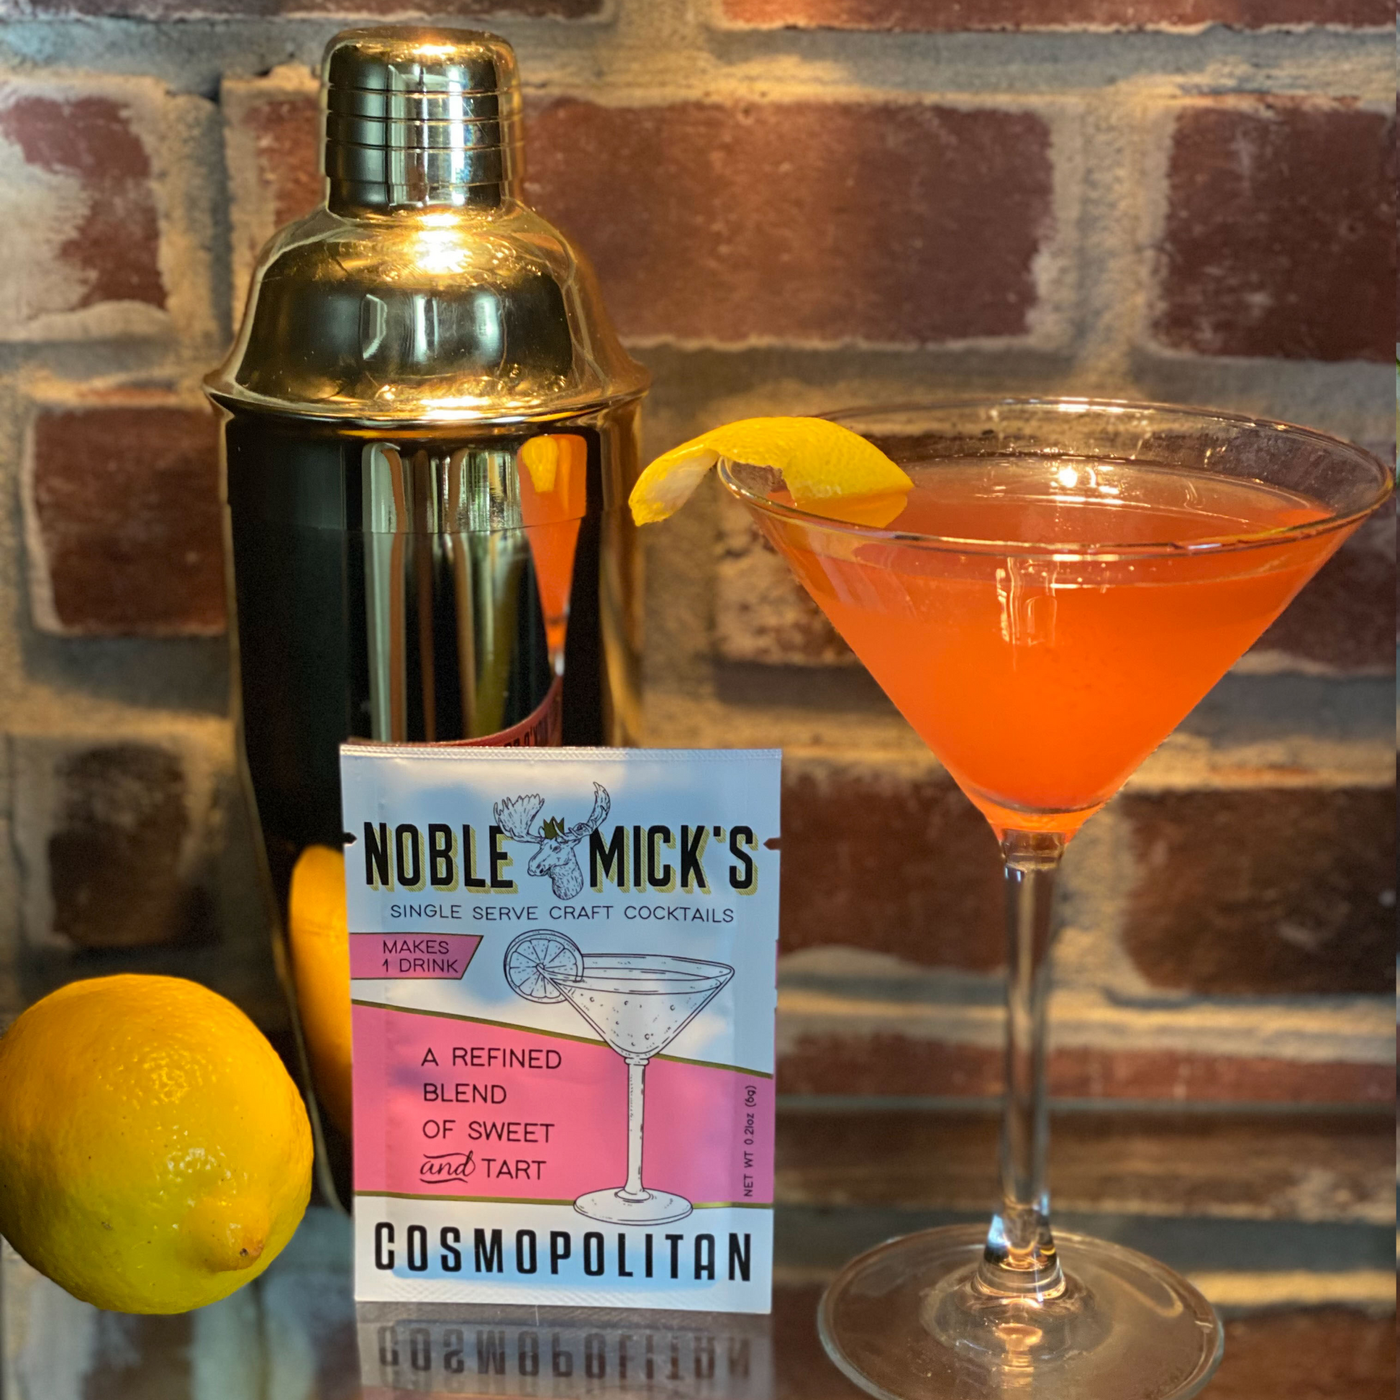 NOBLE MICK'S - Single Serve Craft Cocktails - Cosmopolitan Single Serve Craft Cocktail